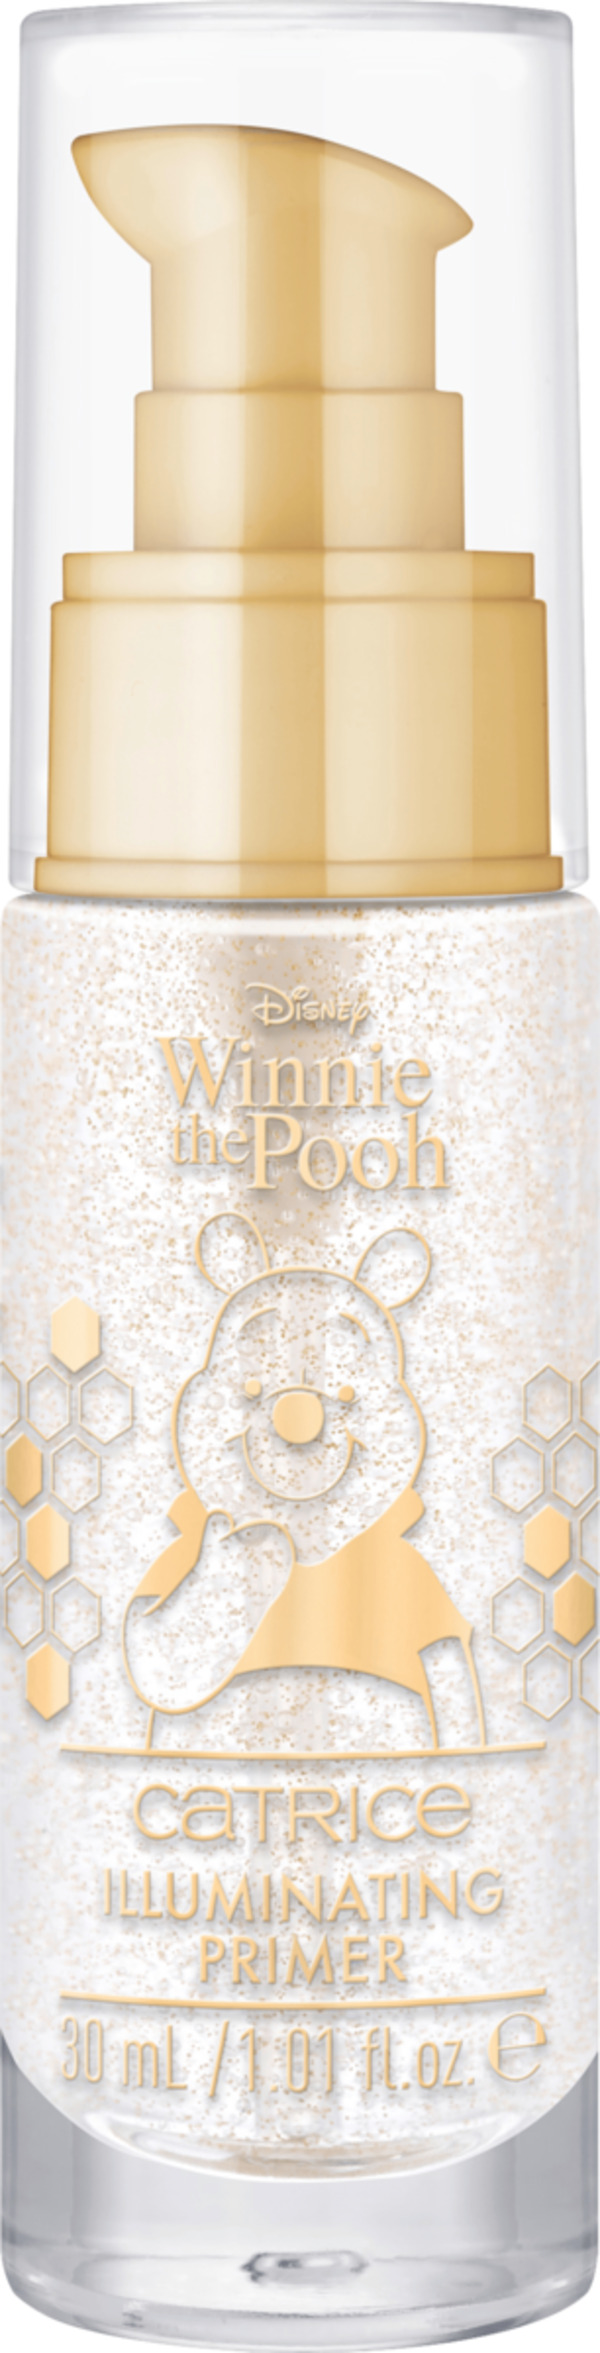 Bild 1 von Catrice Primer Disney Winnie the Pooh Illuminating 010 Poohtiful